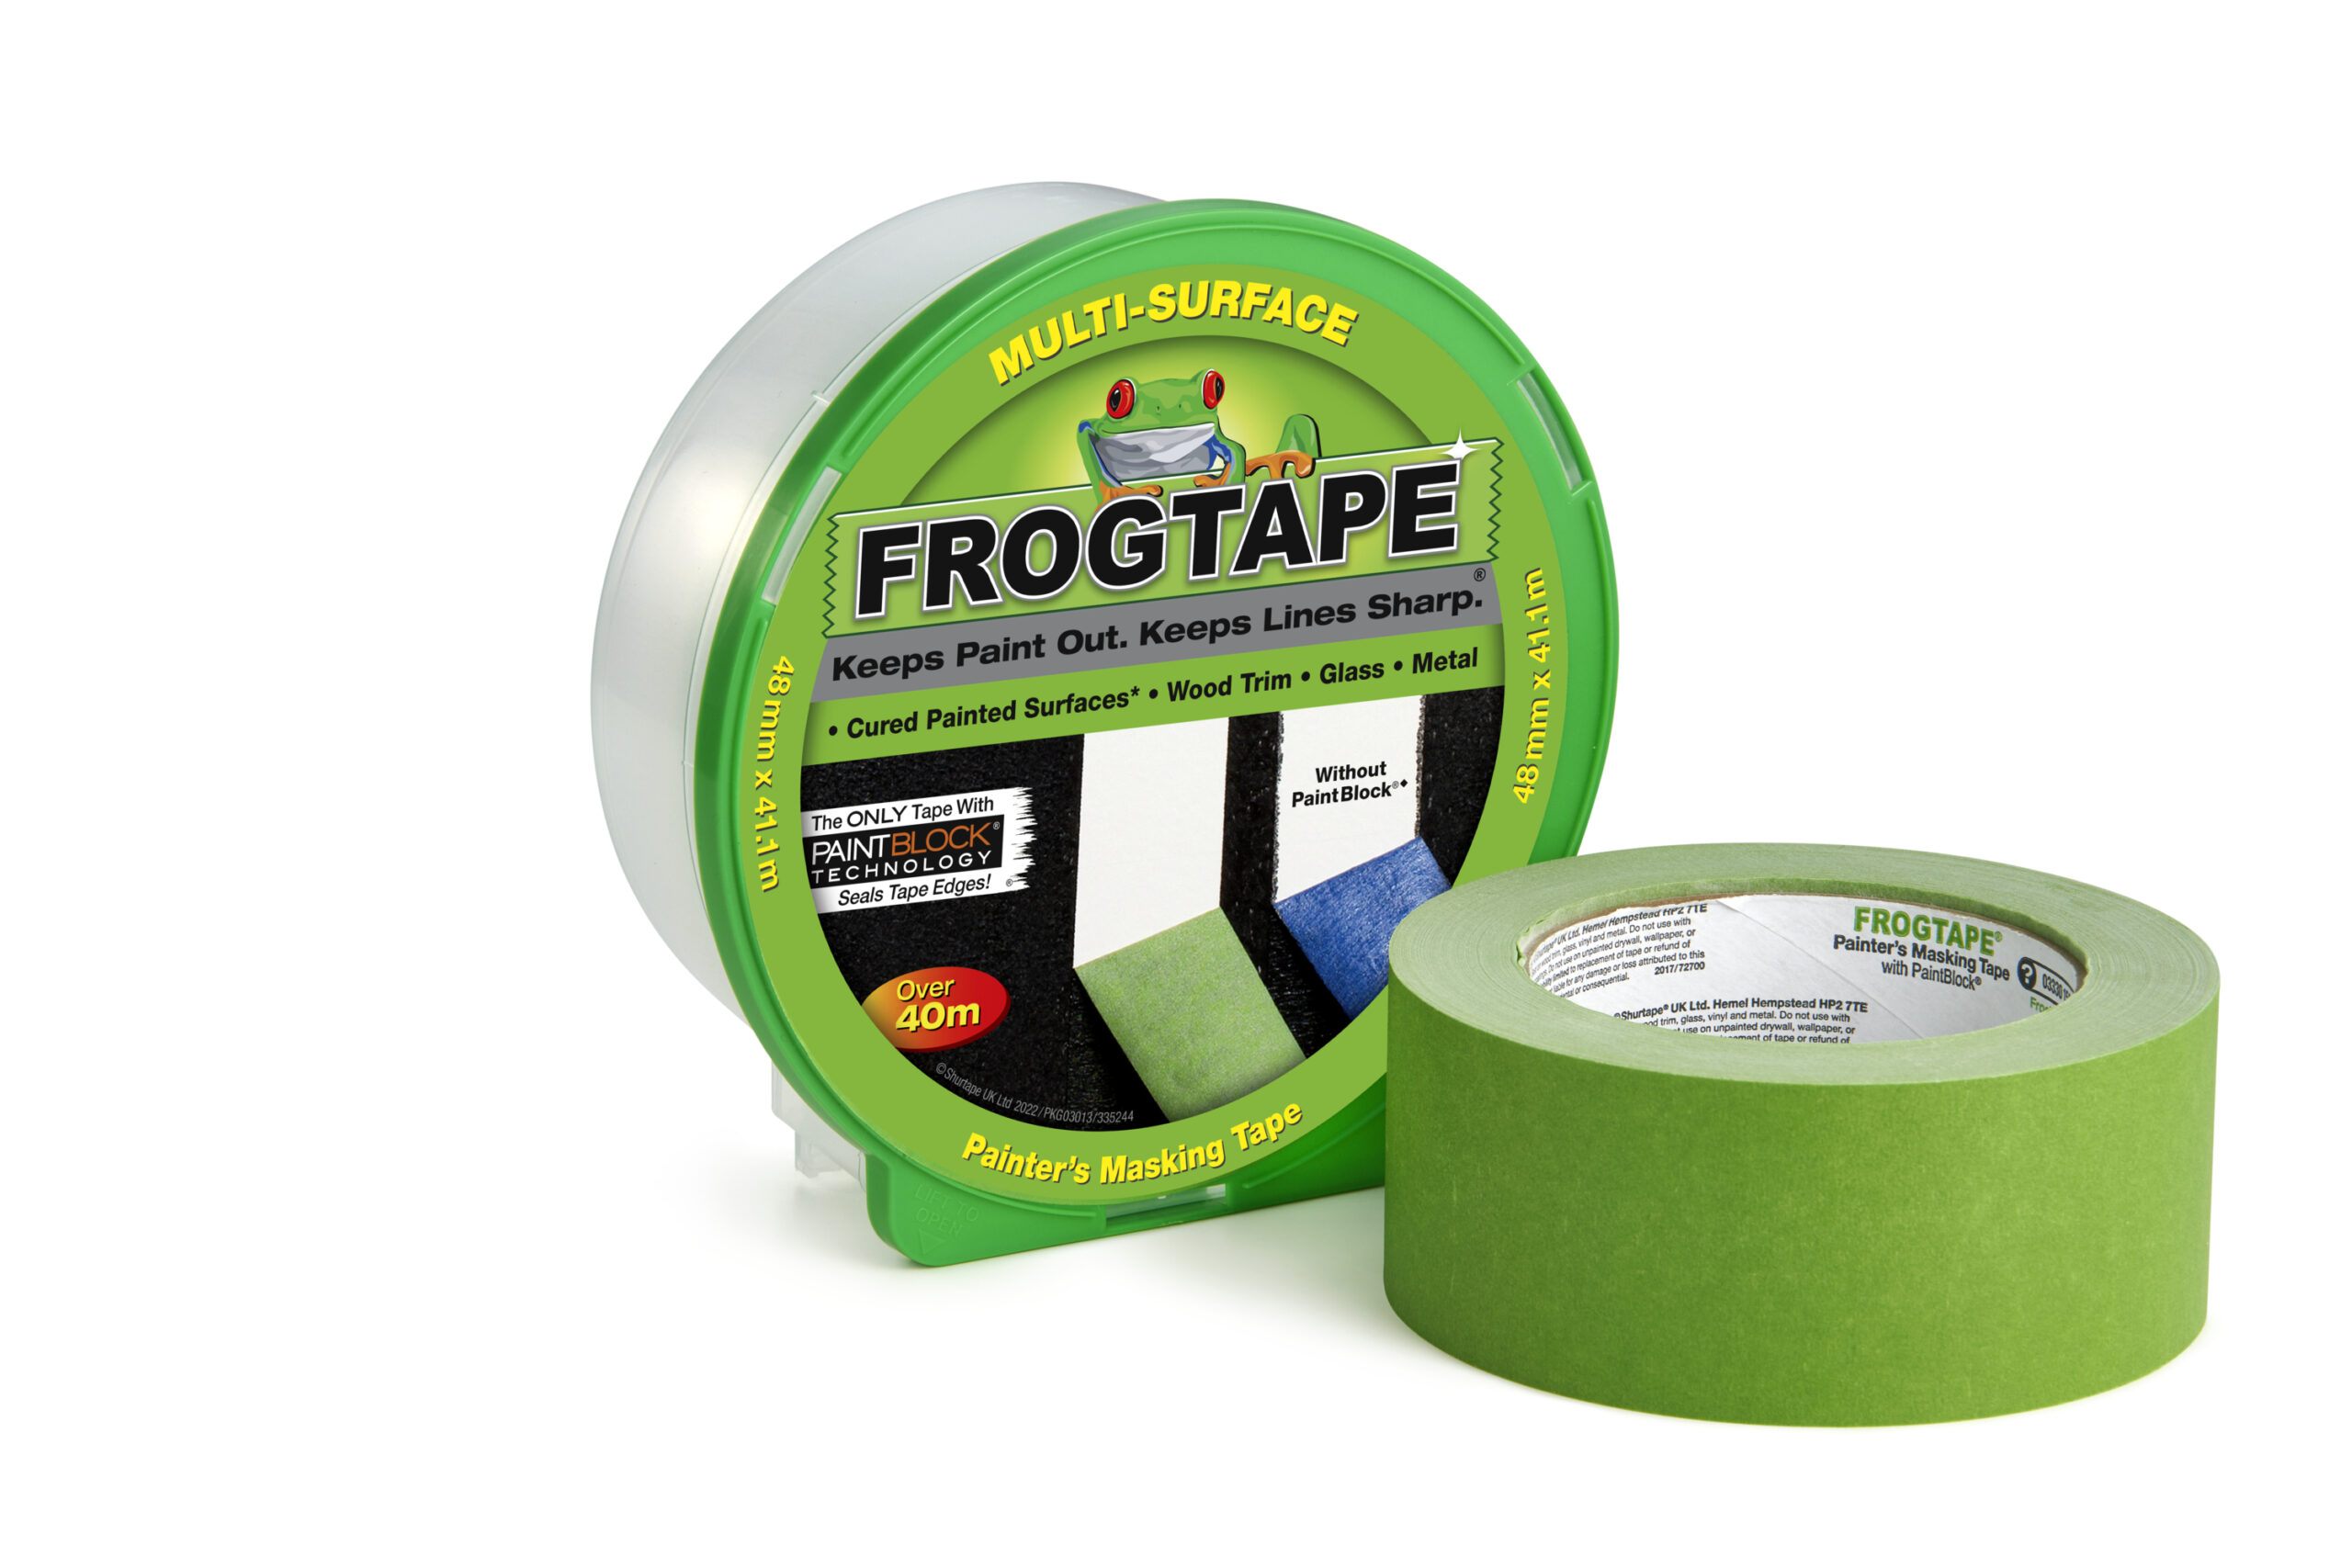 FrogTape® Multi-Surface Painter's Tape – Green - Frogtape